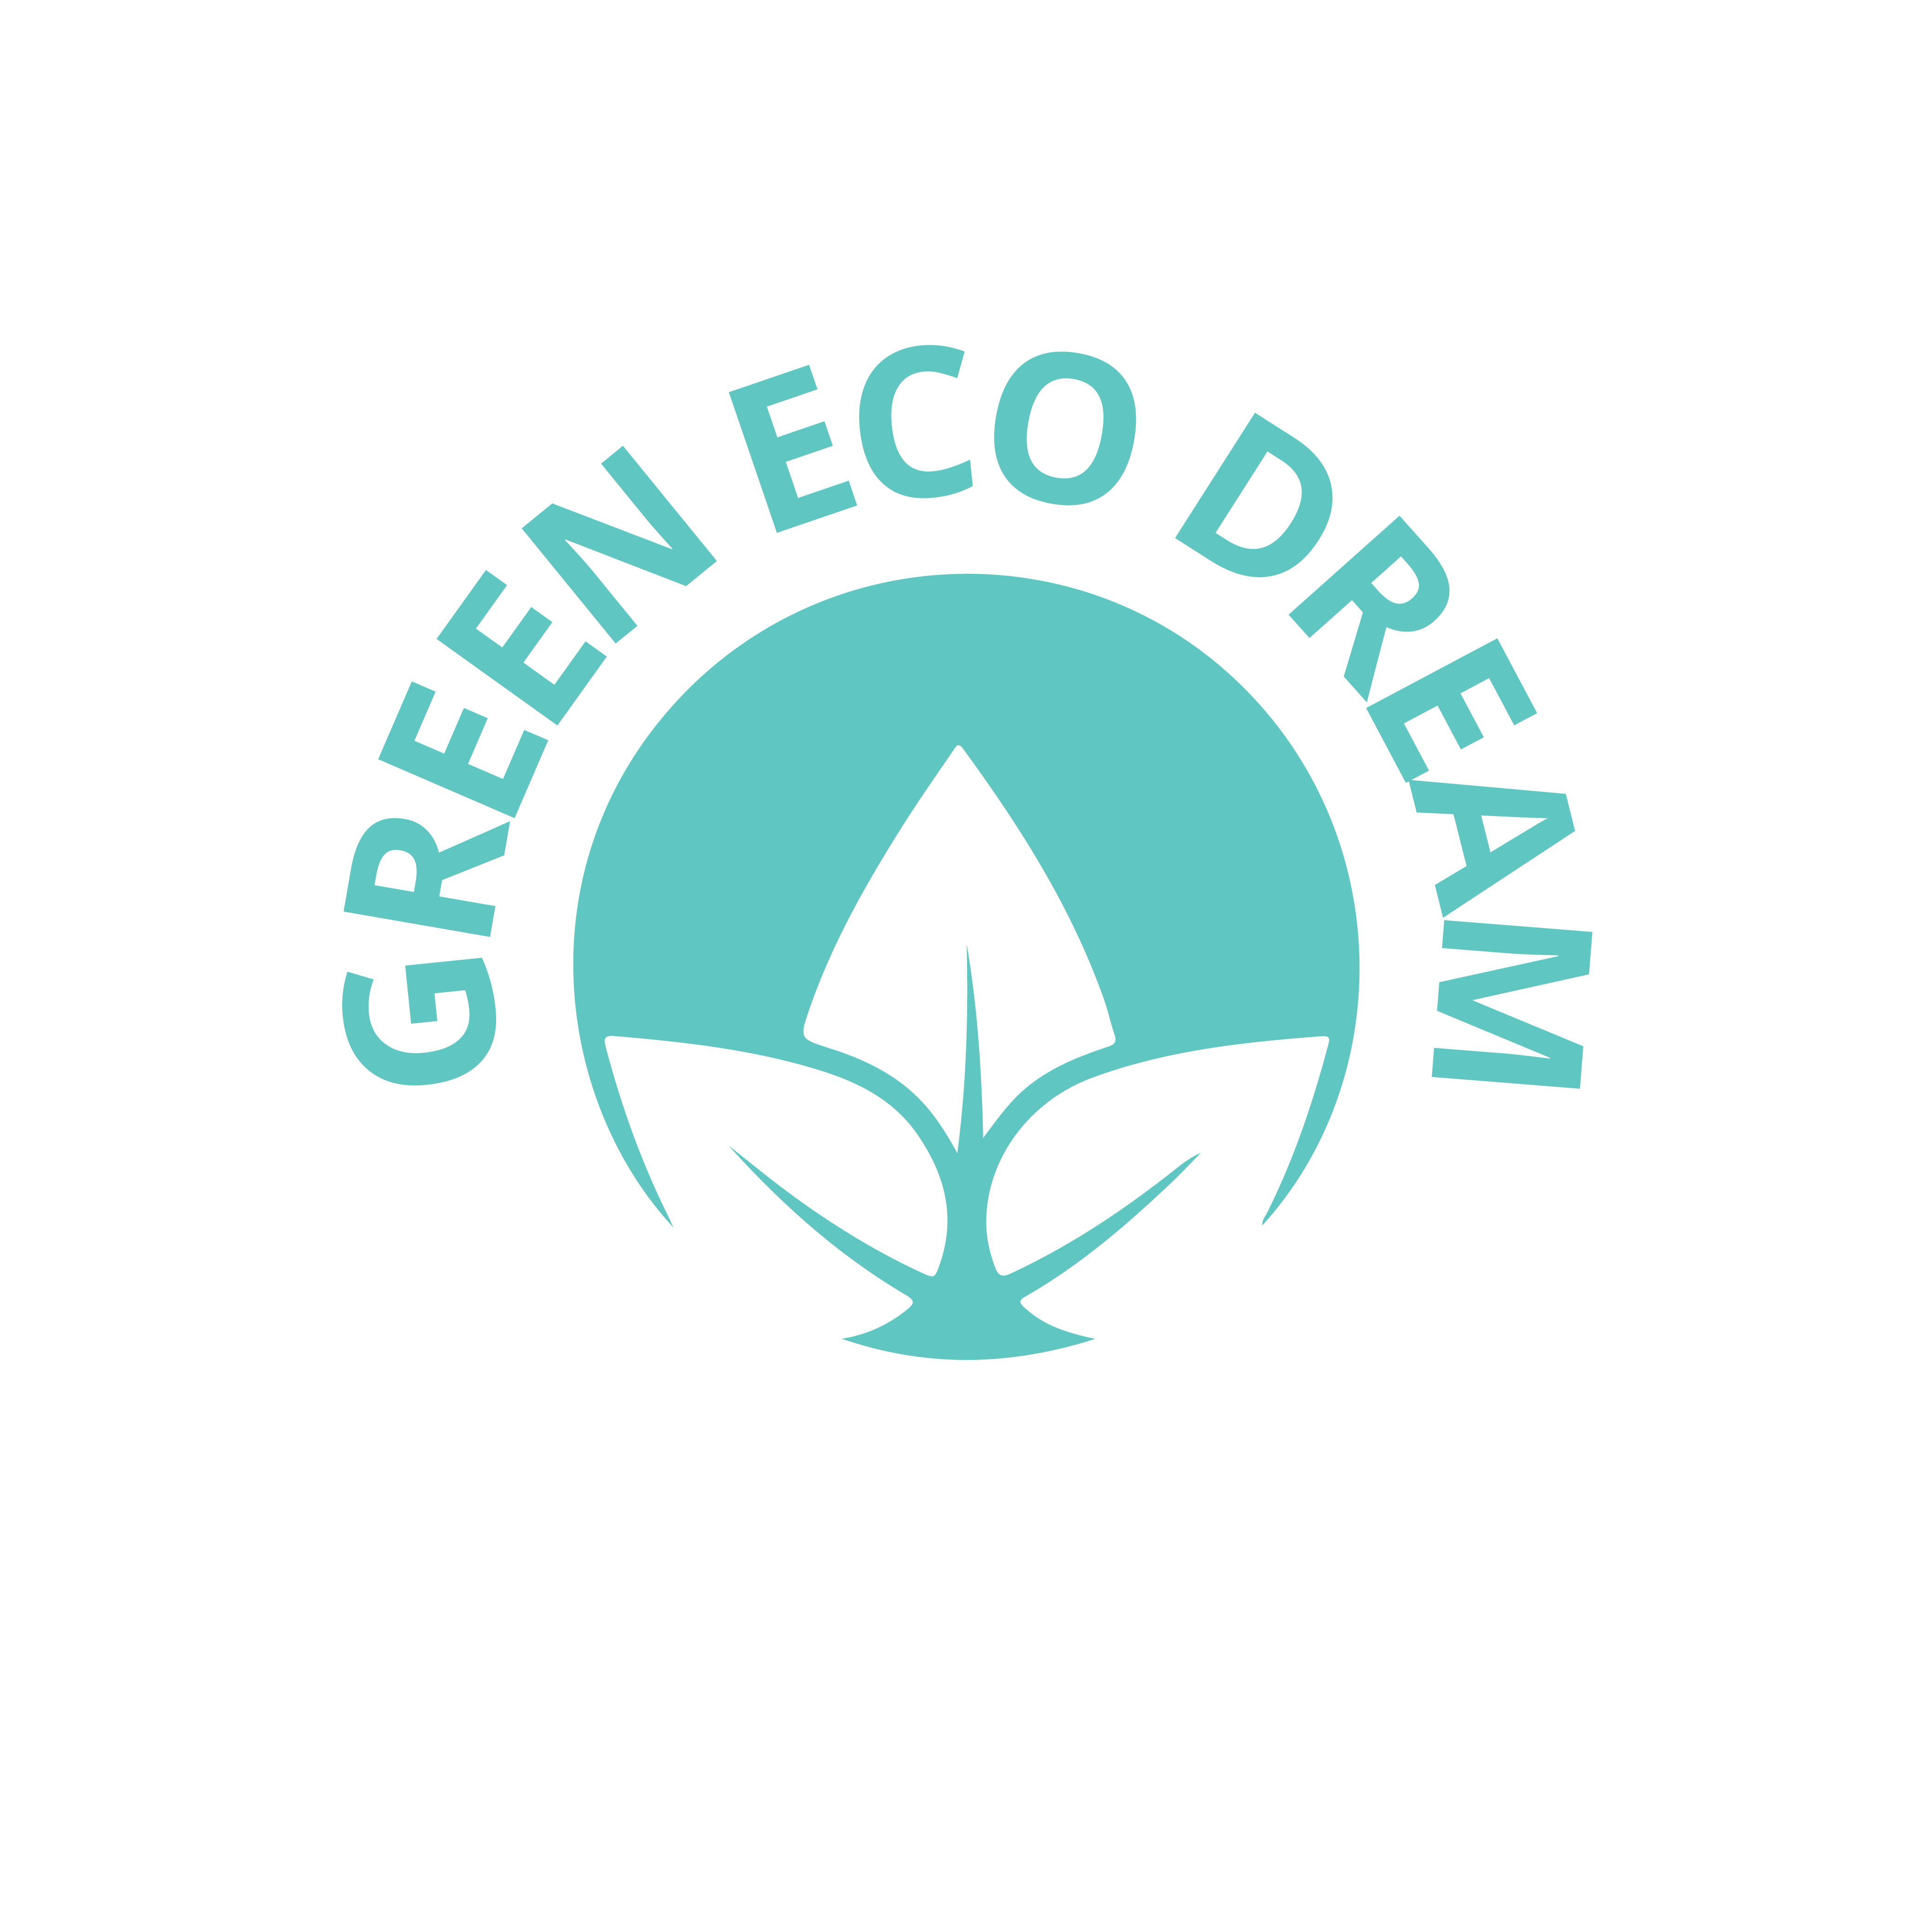 ONE-STOP ECO SHOP | GREEN ECO DREAM